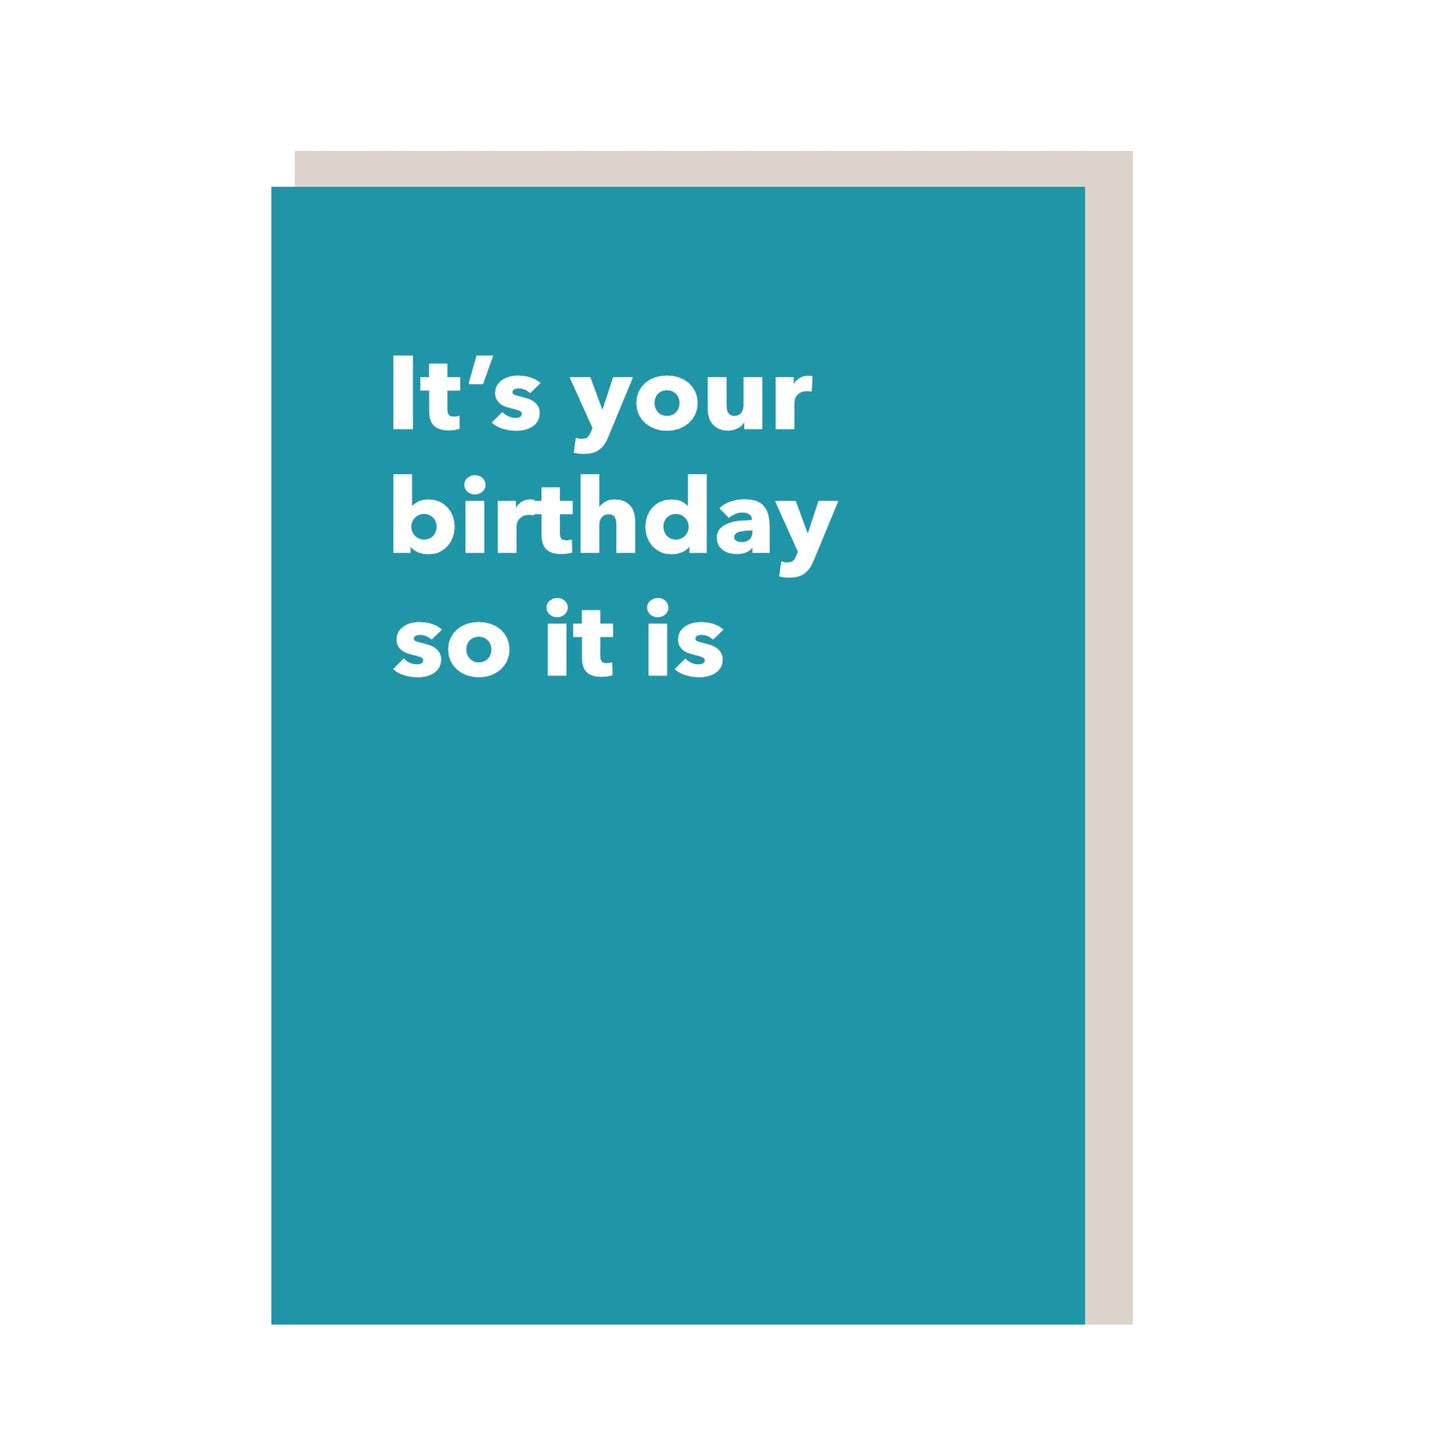 It’s your birthday so it is